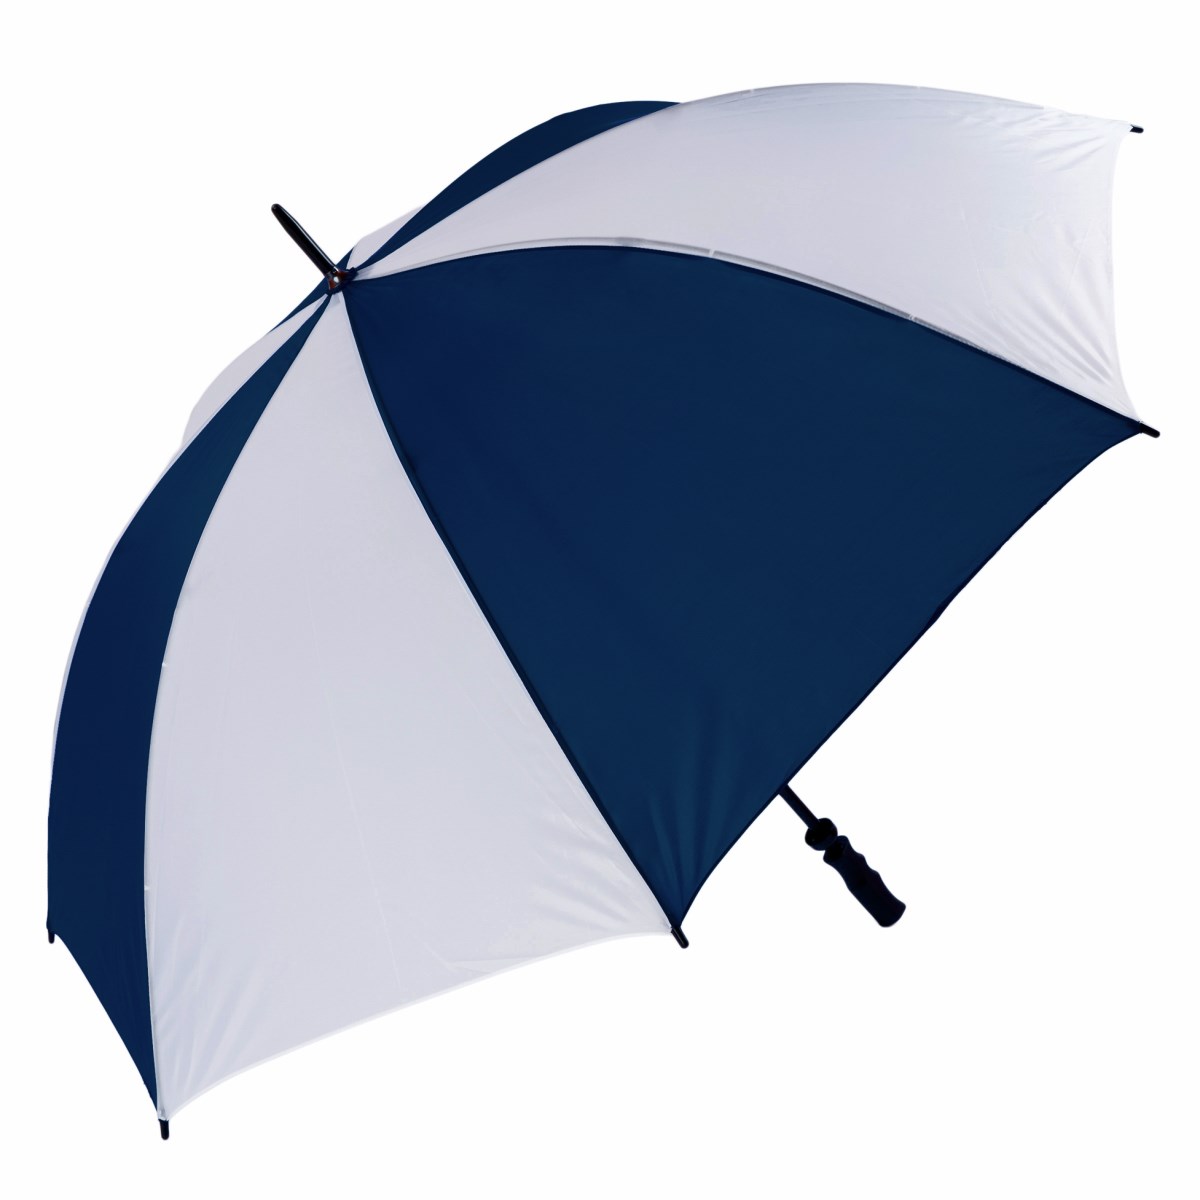 Navy and White Golf Umbrella - open, angled